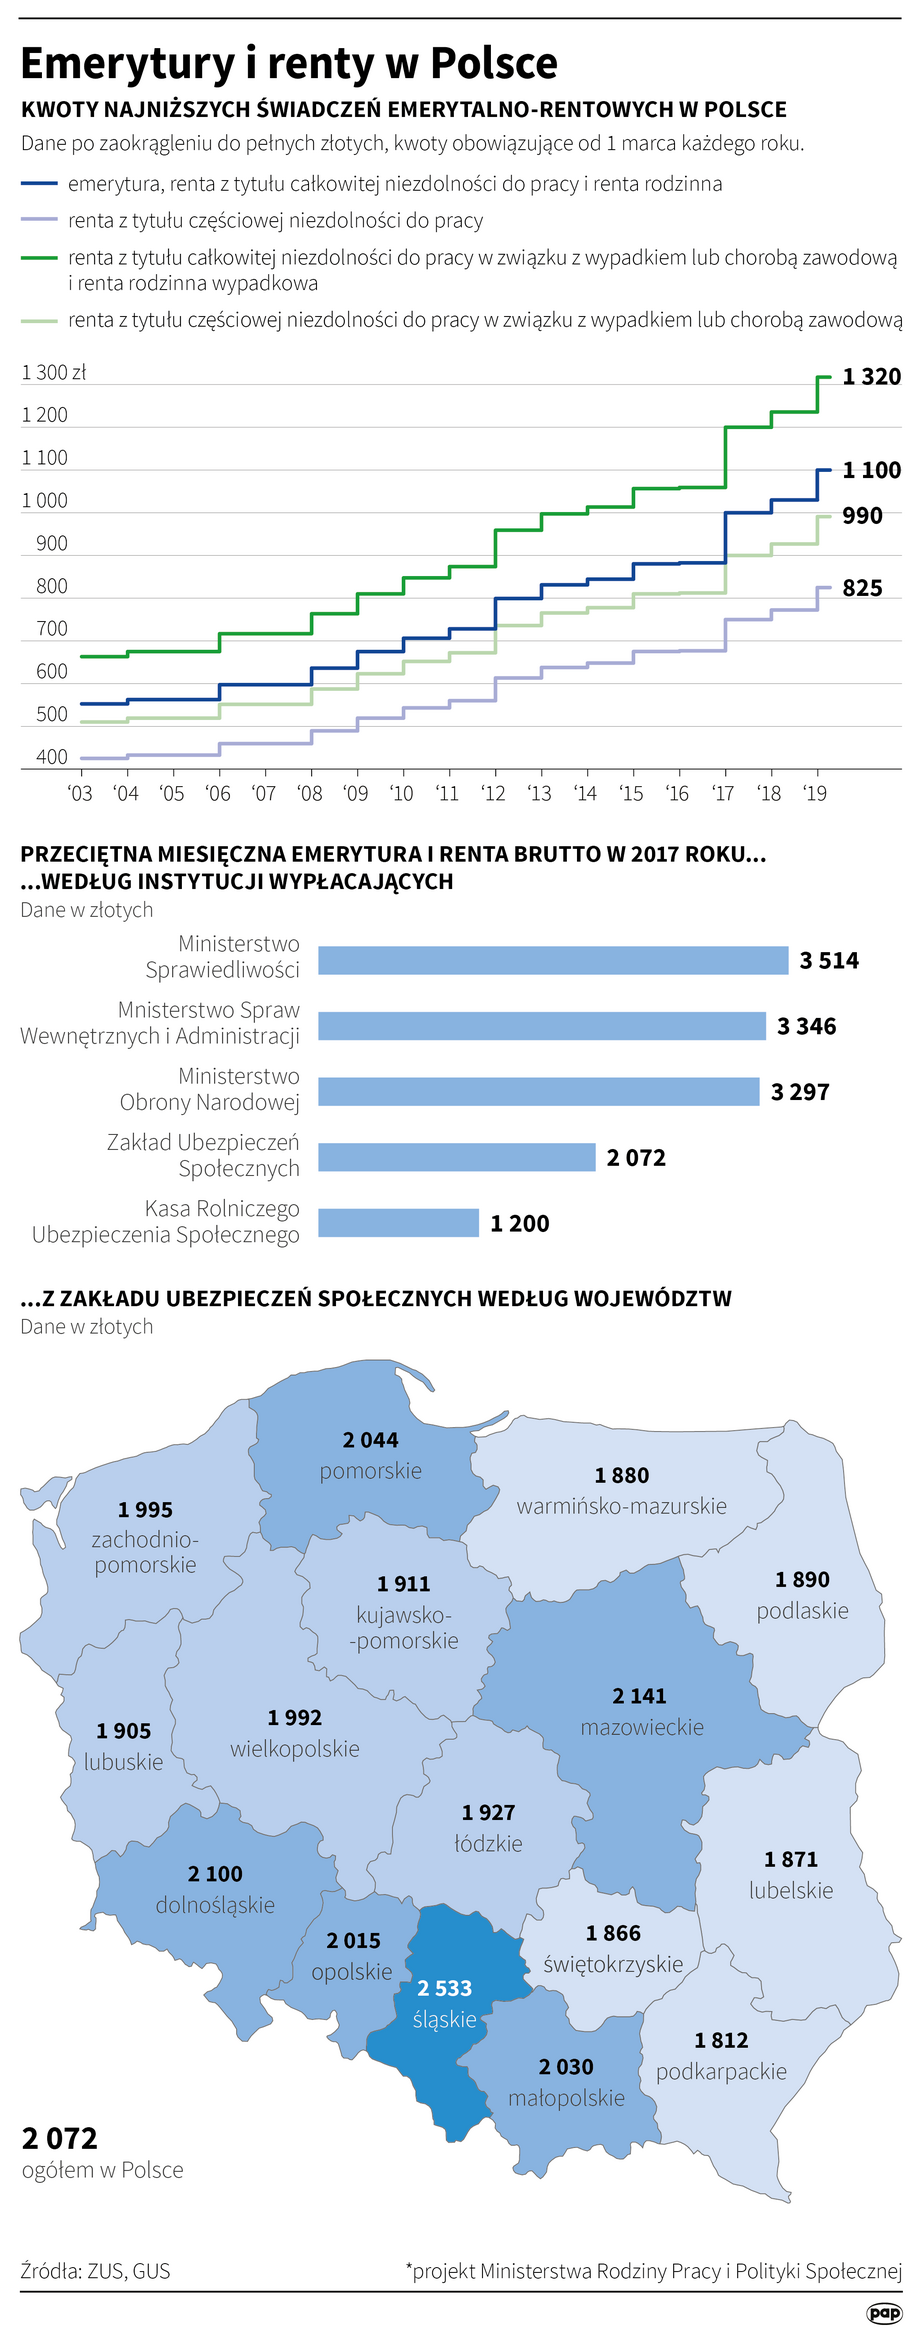 Emerytury i renty w Polsce